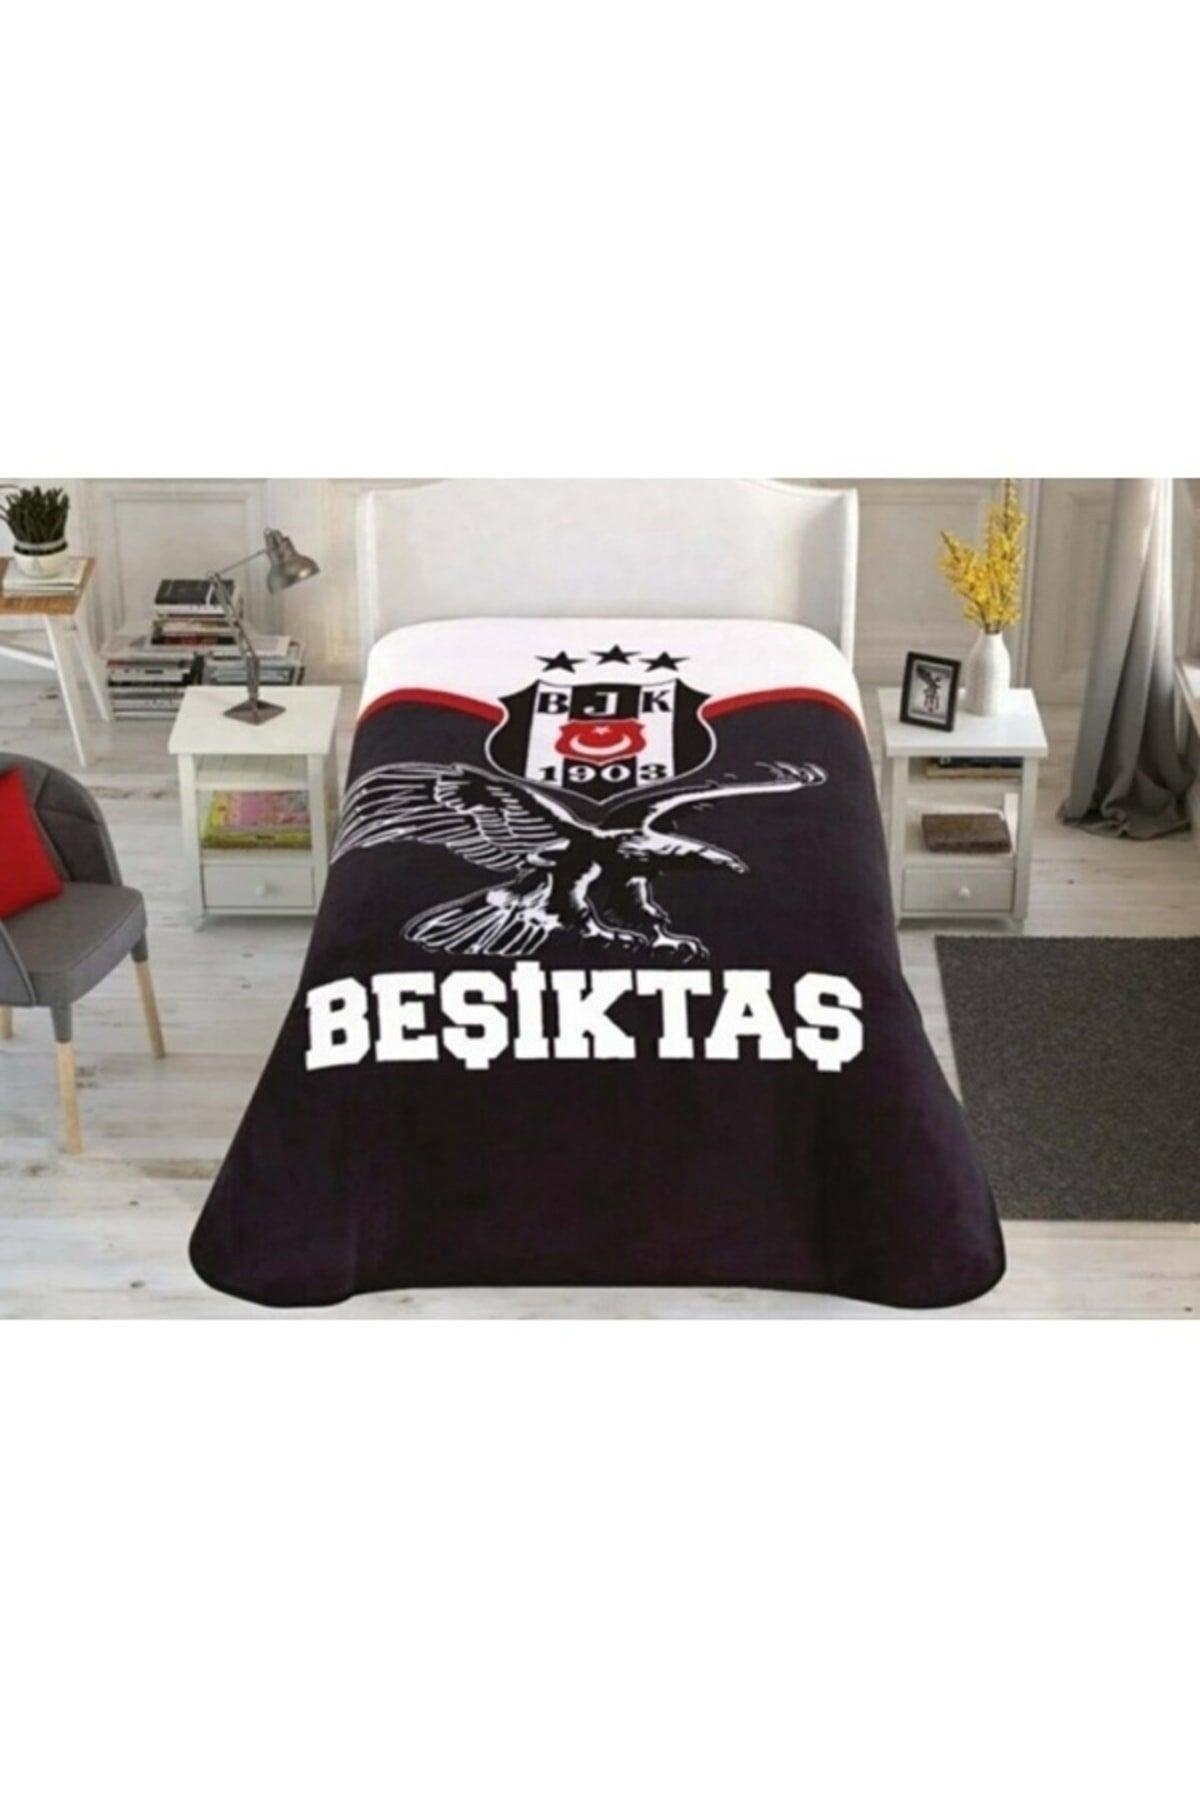 Beşiktaş Champion Kartal Licensed Blanket - Swordslife